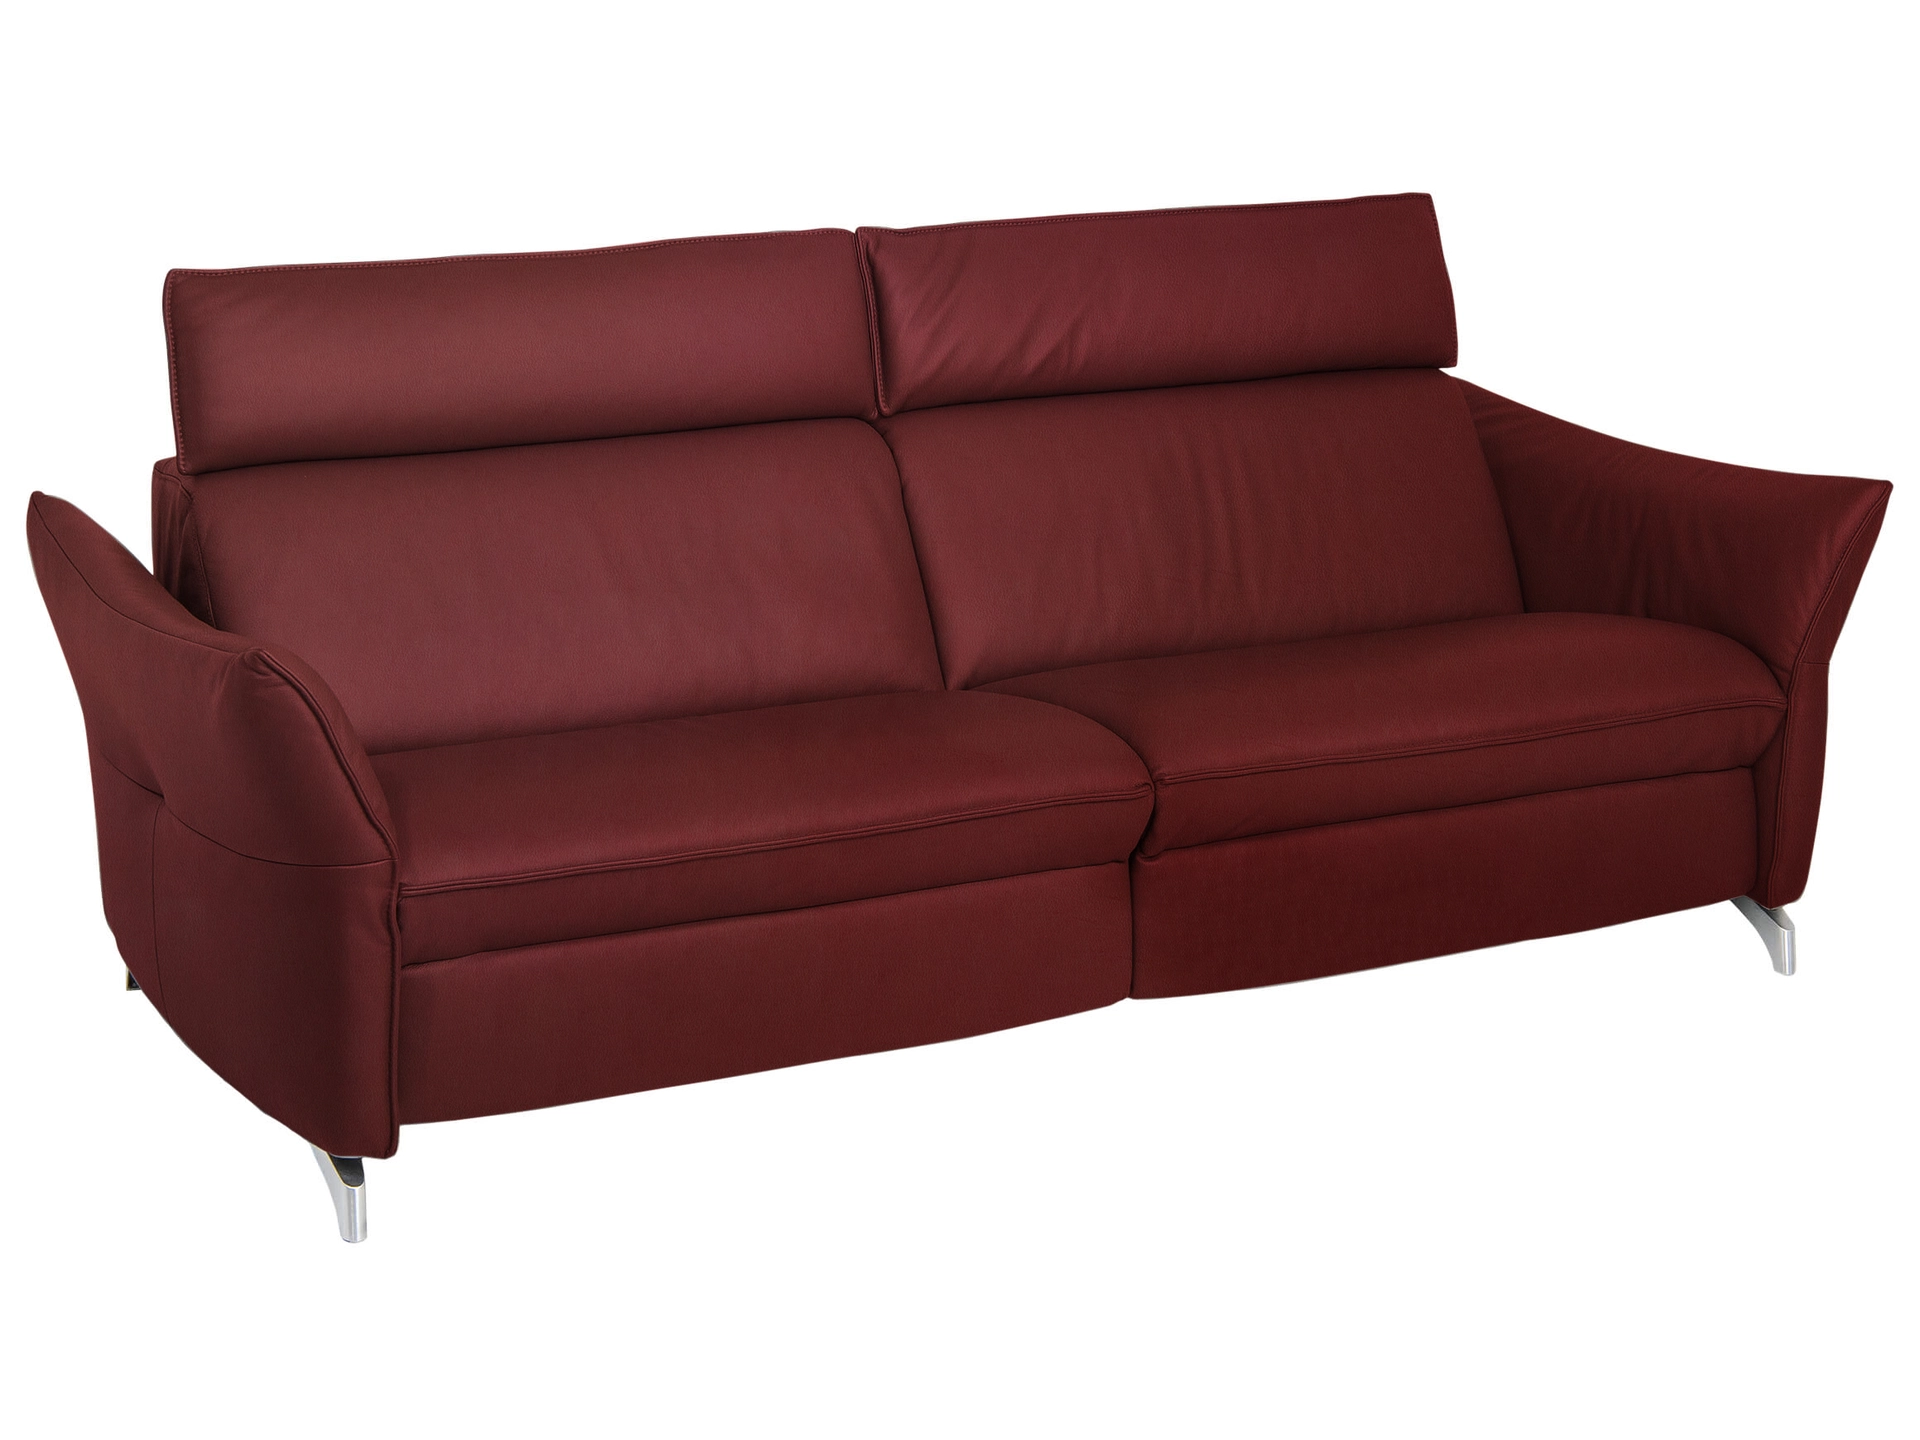 Sofa Catania Basic B: 224 cm Himolla / Farbe: Merlot / Material: Leder Basic